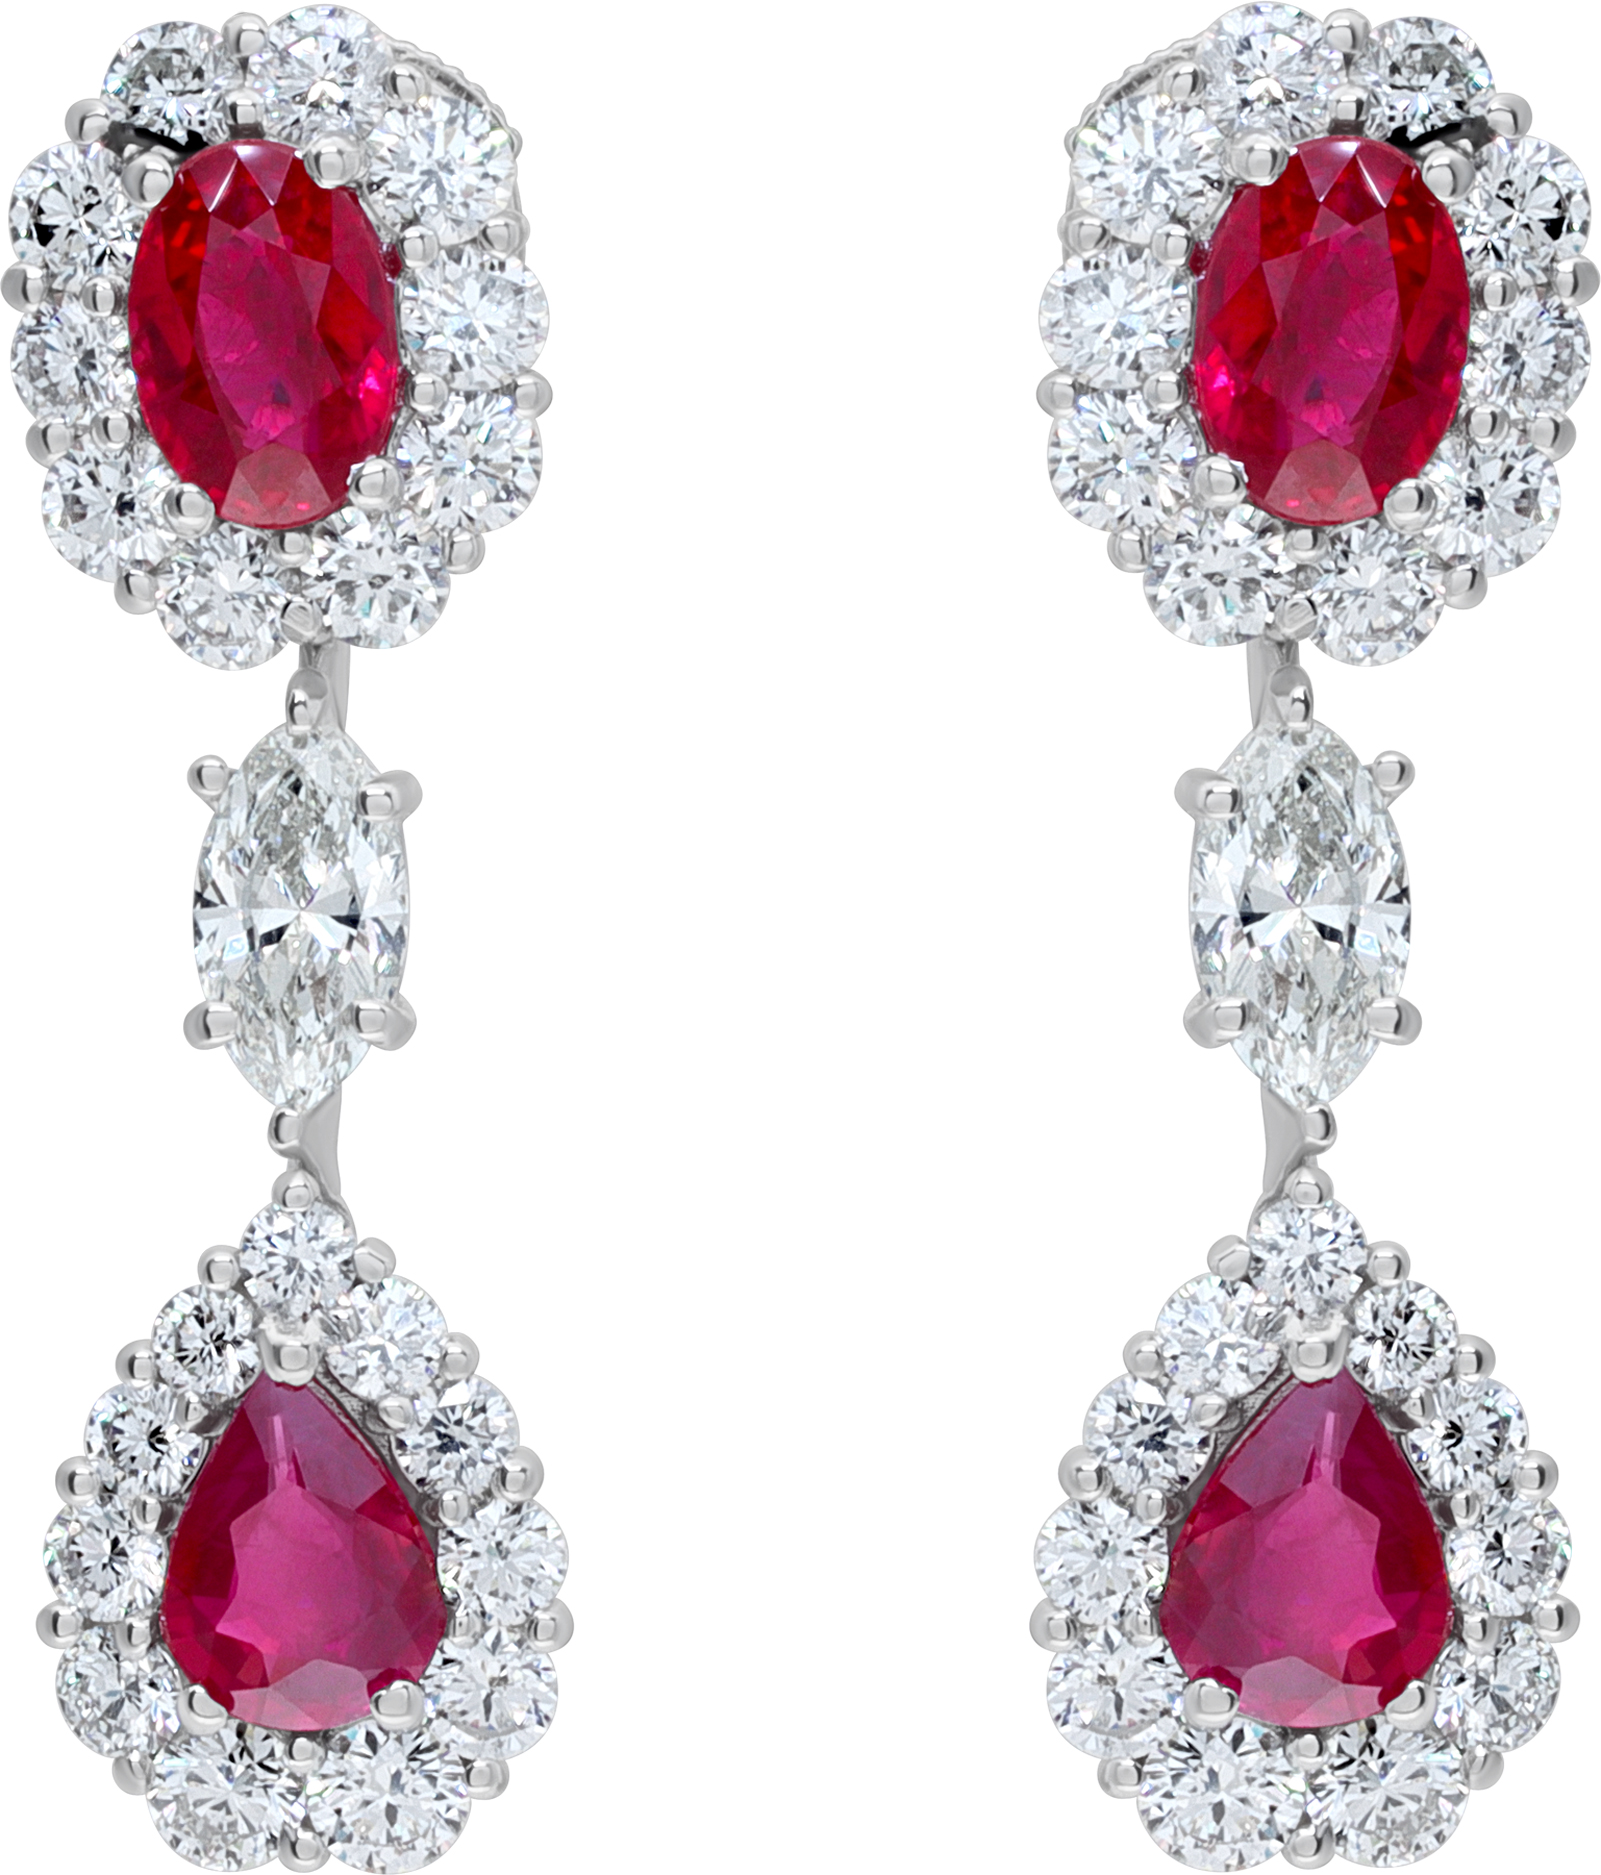 GIA Certified Burma Ruby & diamond earrings in platinum